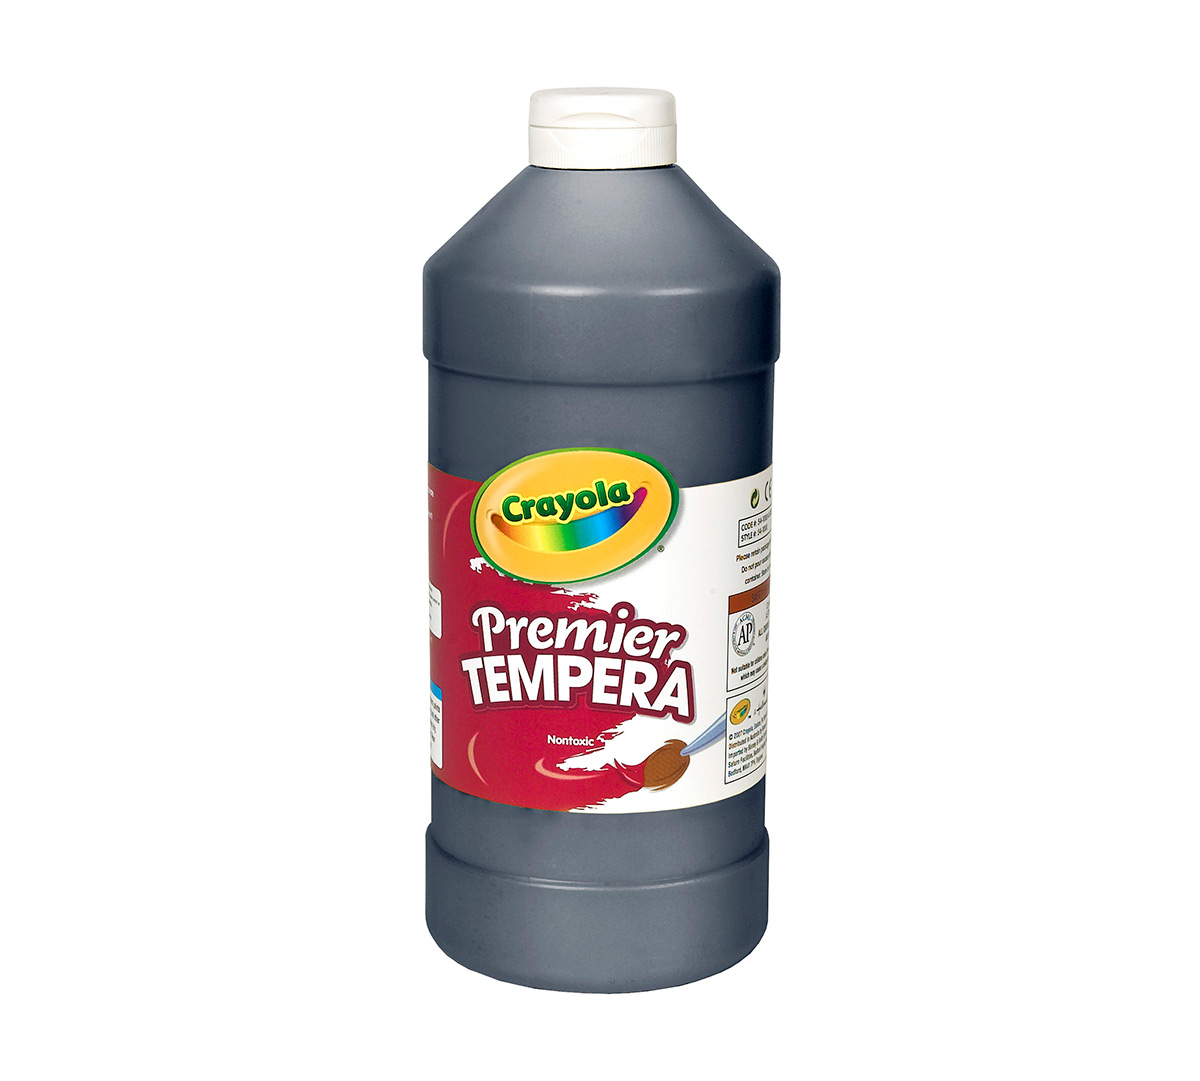 Premier Tempera Paint, 32 oz Bottle | Crayola.com | Crayola